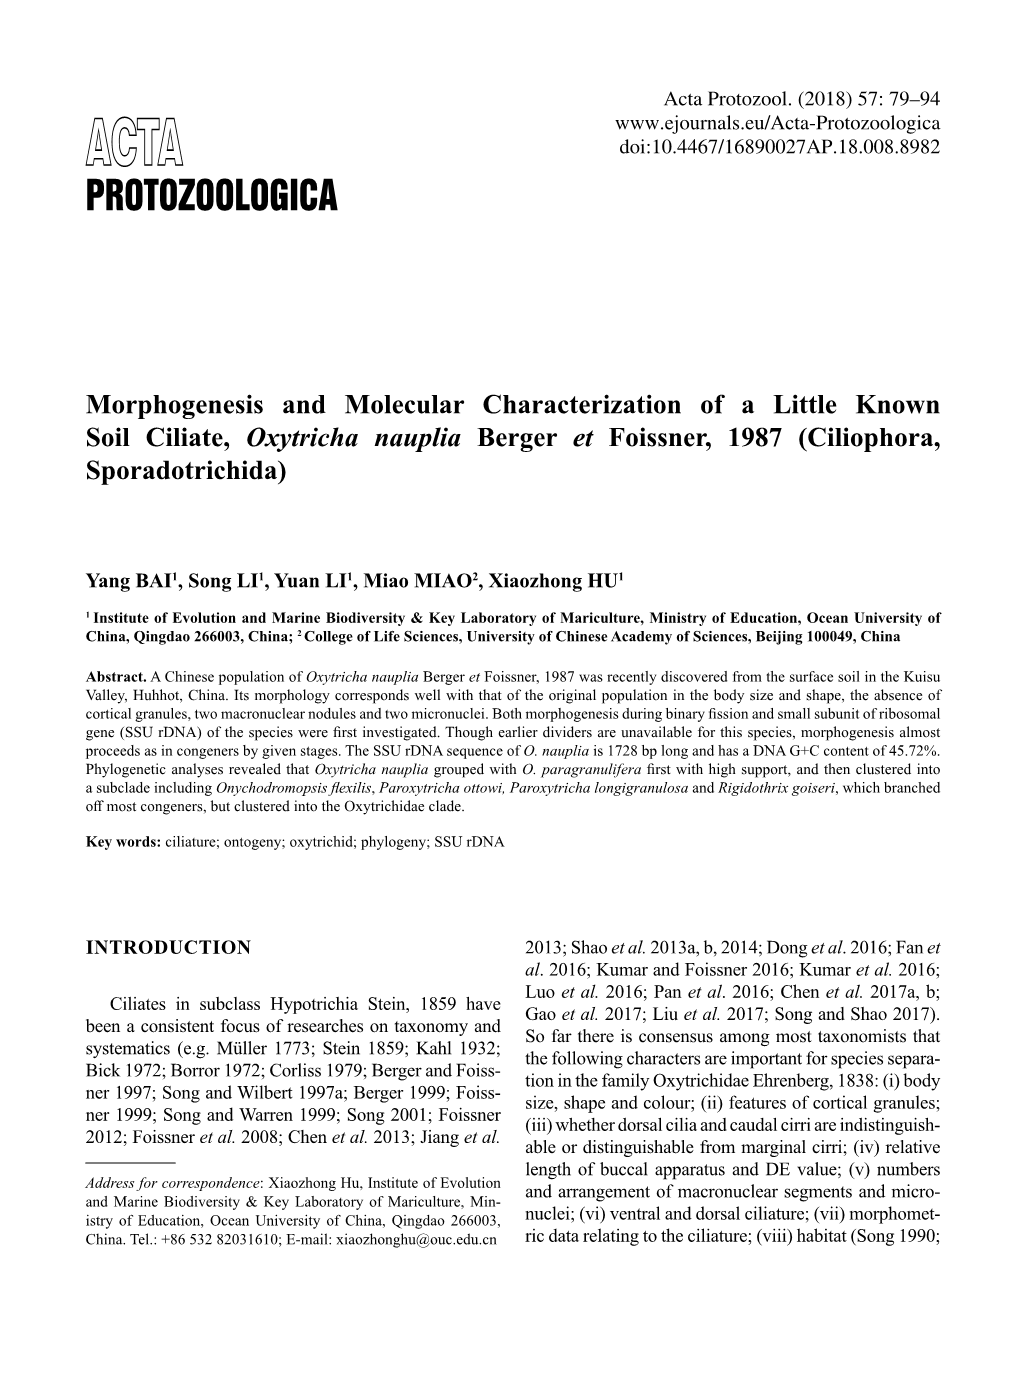 Morphogenesis and Molecular Characterization of a Little Known Soil Ciliate, Oxytricha Nauplia Berger Et Foissner, 1987 (Ciliophora, Sporadotrichida)